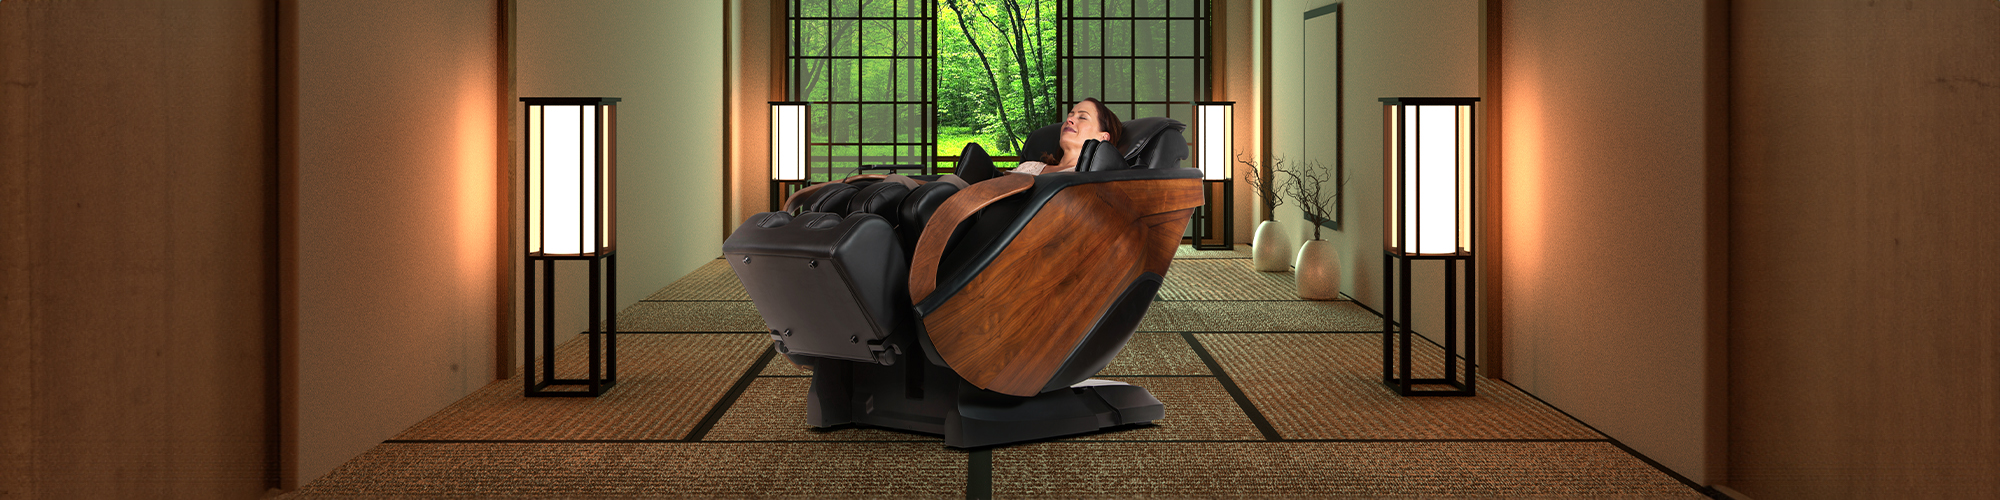 DCore Cirrus Massage Chair